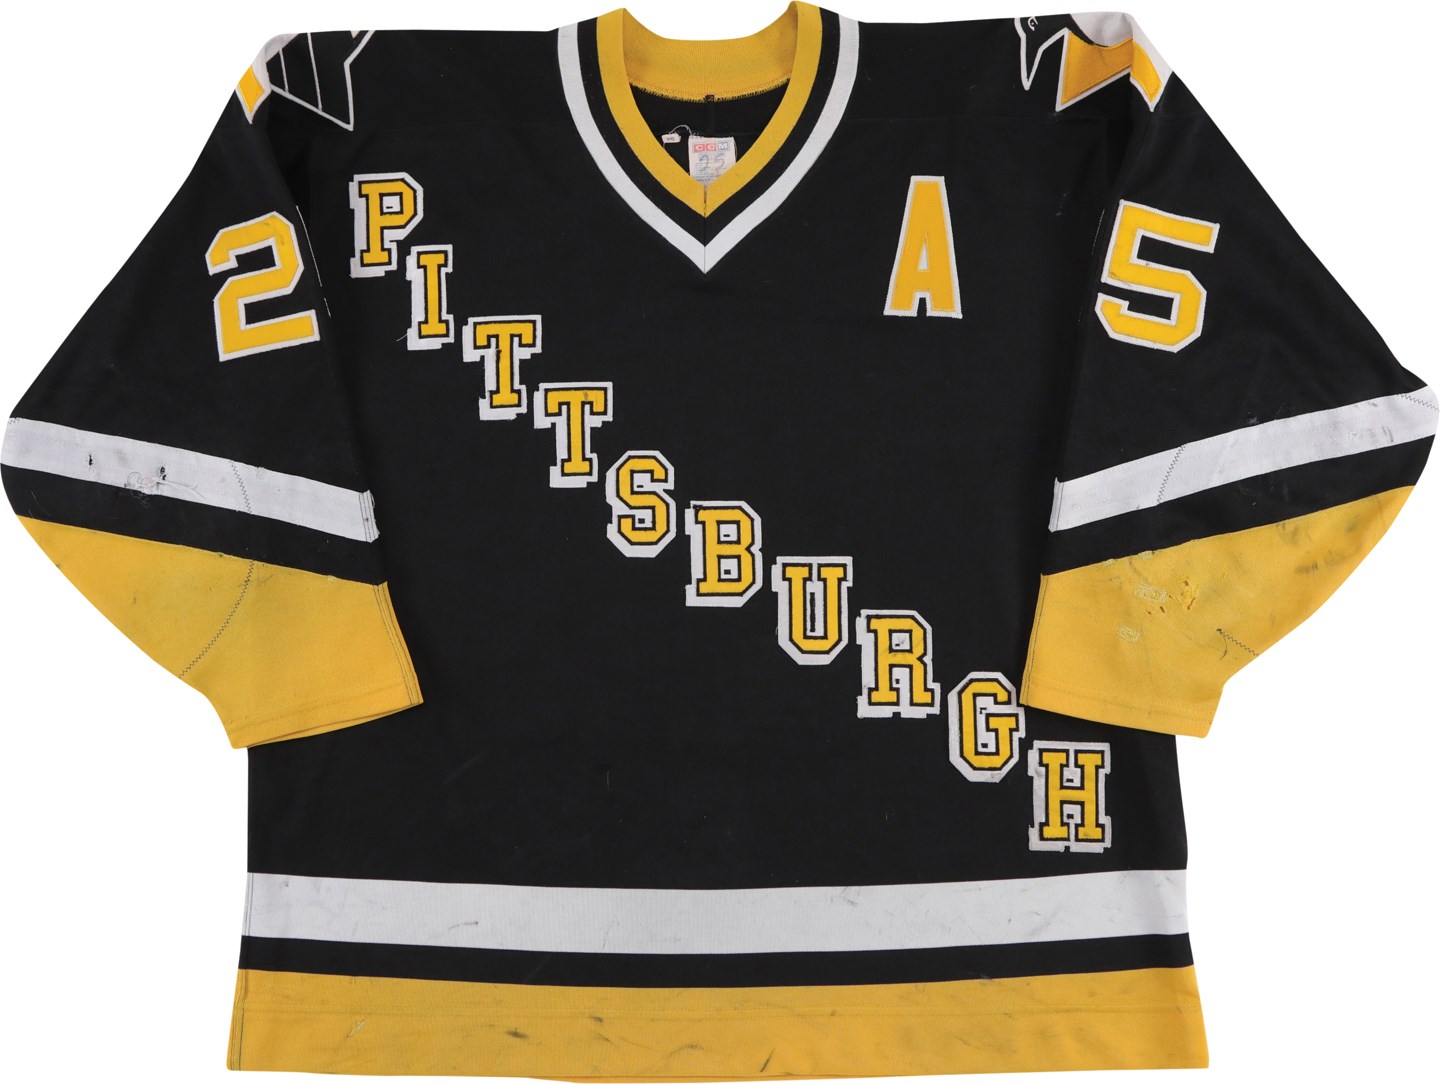 - 4/11/94 Kevin Stevens "Hammered" Pittsburgh Penguins Game Worn Jersey (Photo-Matched)